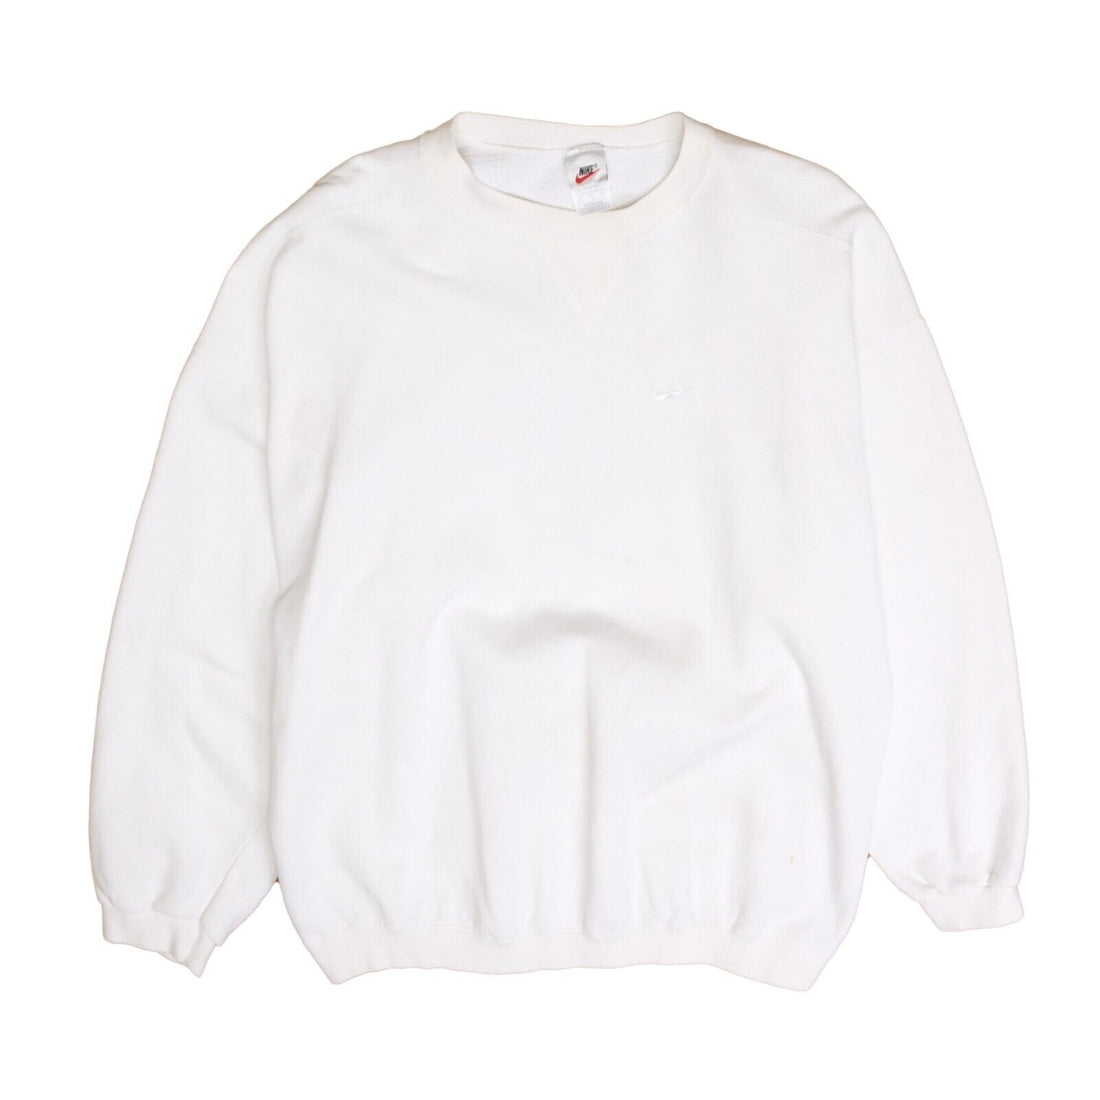 Vintage Nike Sweatshirt Crewneck Size Medium White Embroidered Swoosh 90s